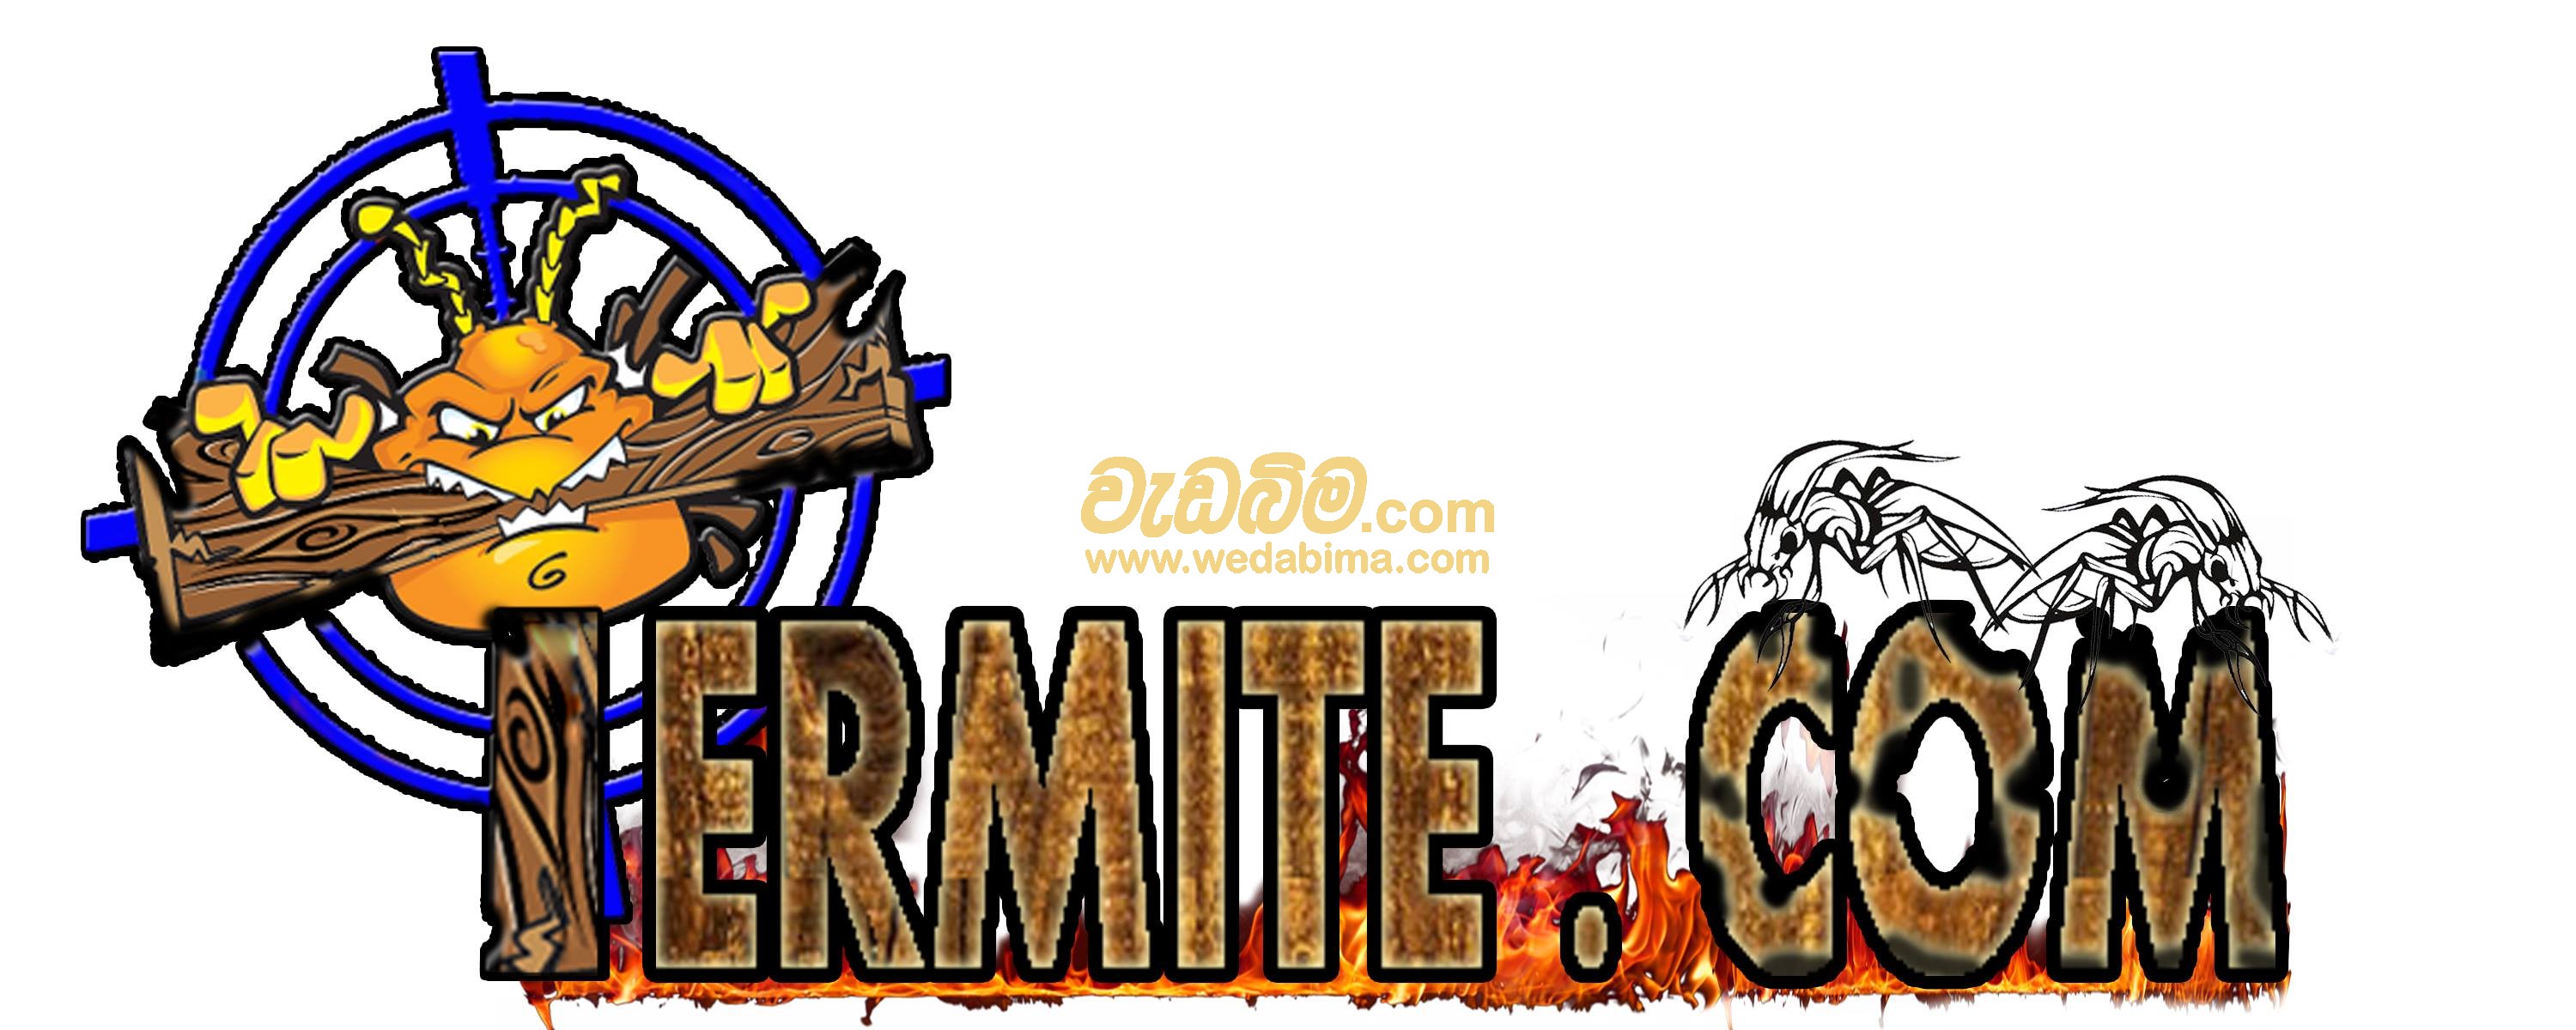 Termite.com (pvt) ltd